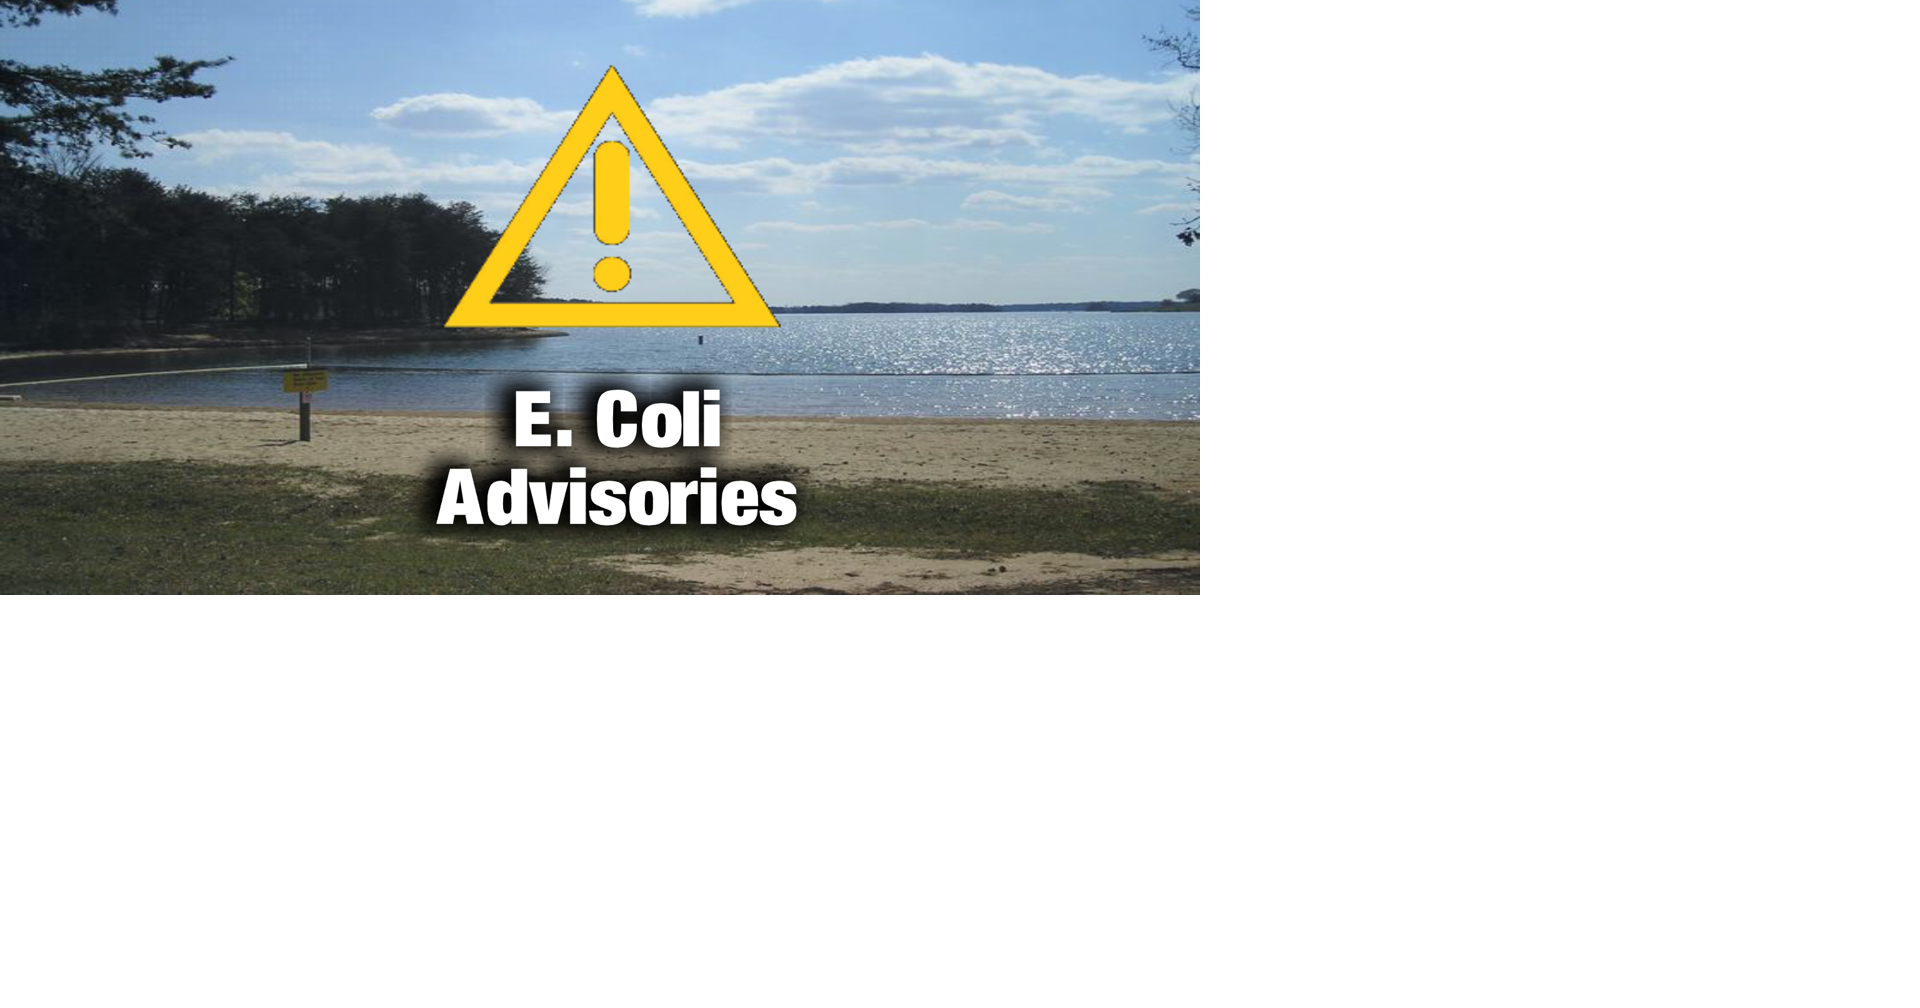 Several Iowa beaches hit with E.Coli advisories